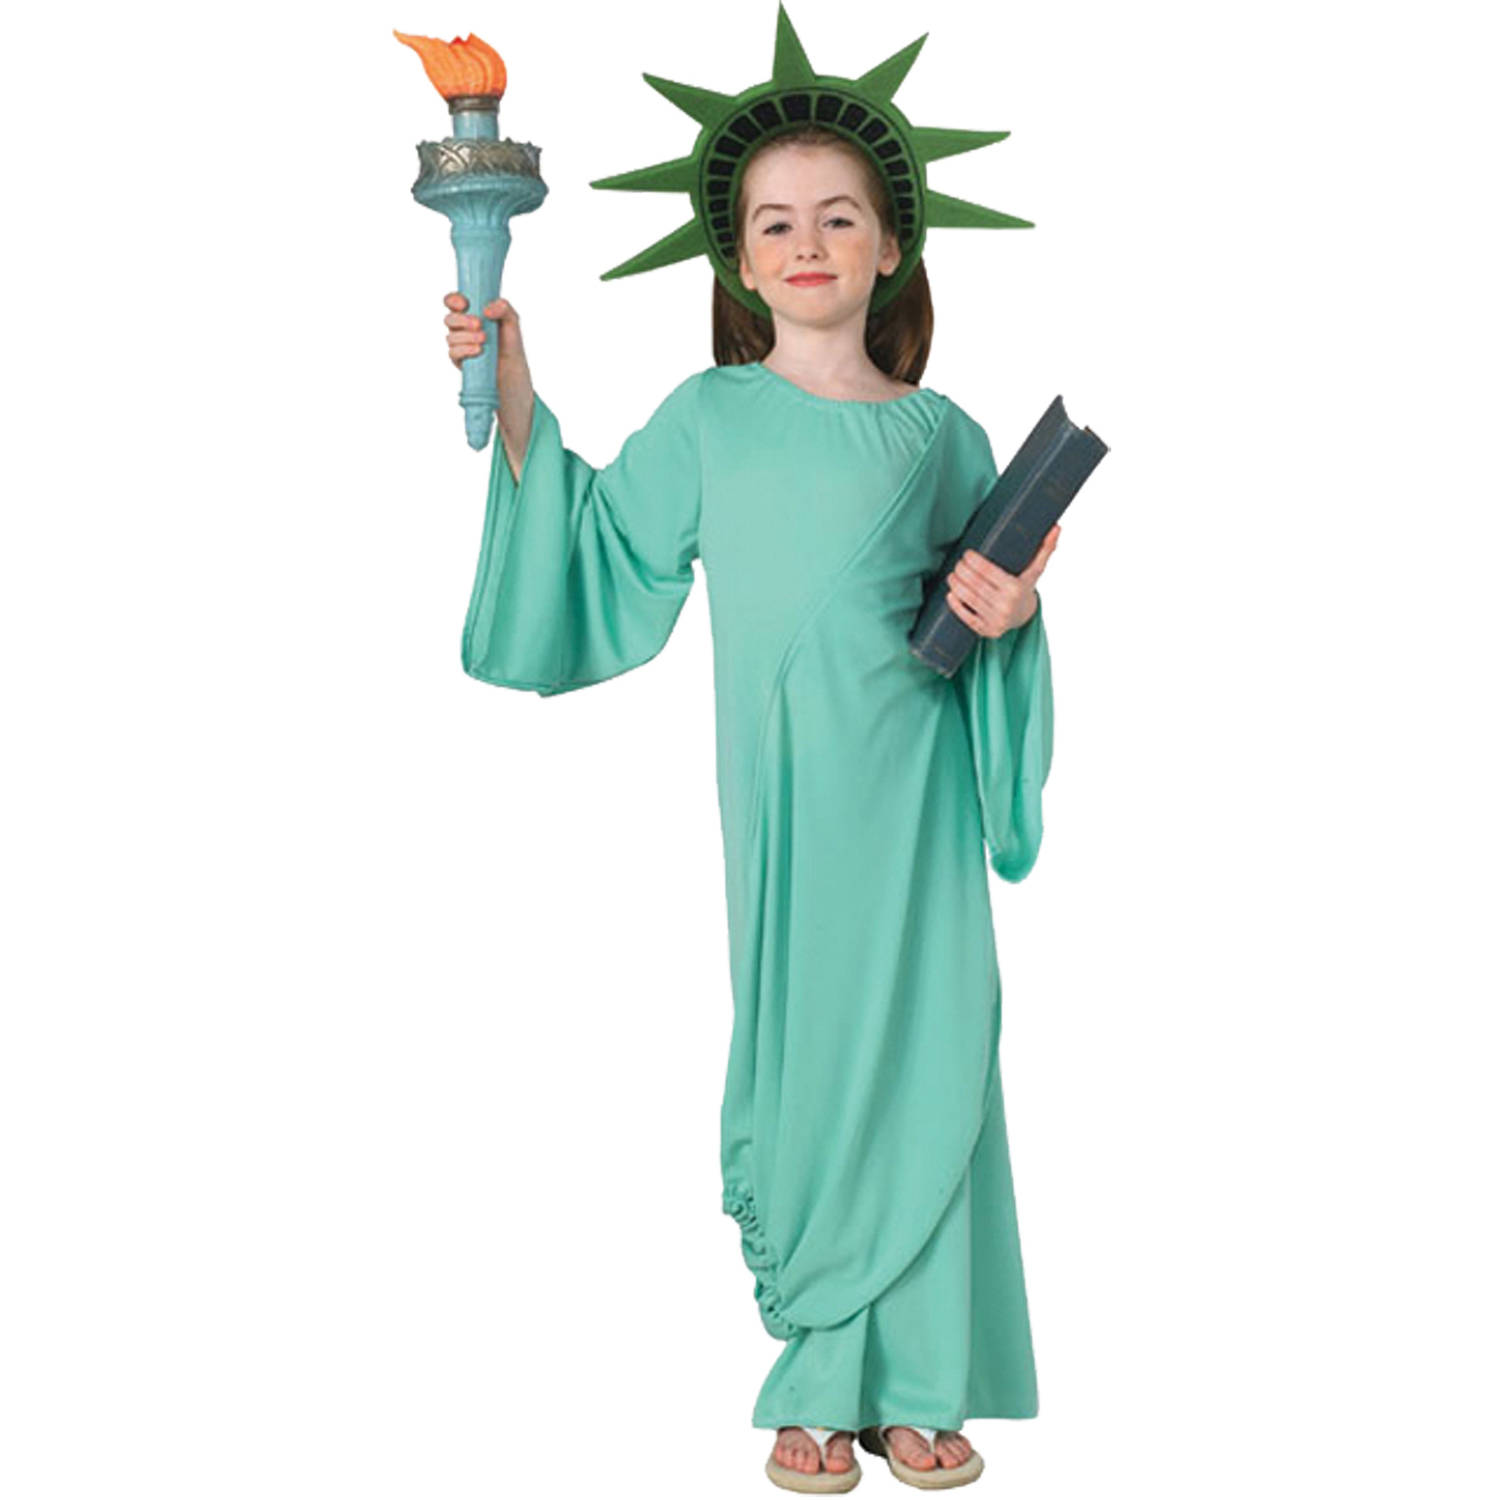 Statue of Liberty Girls Child Halloween Costume - image 1 of 2